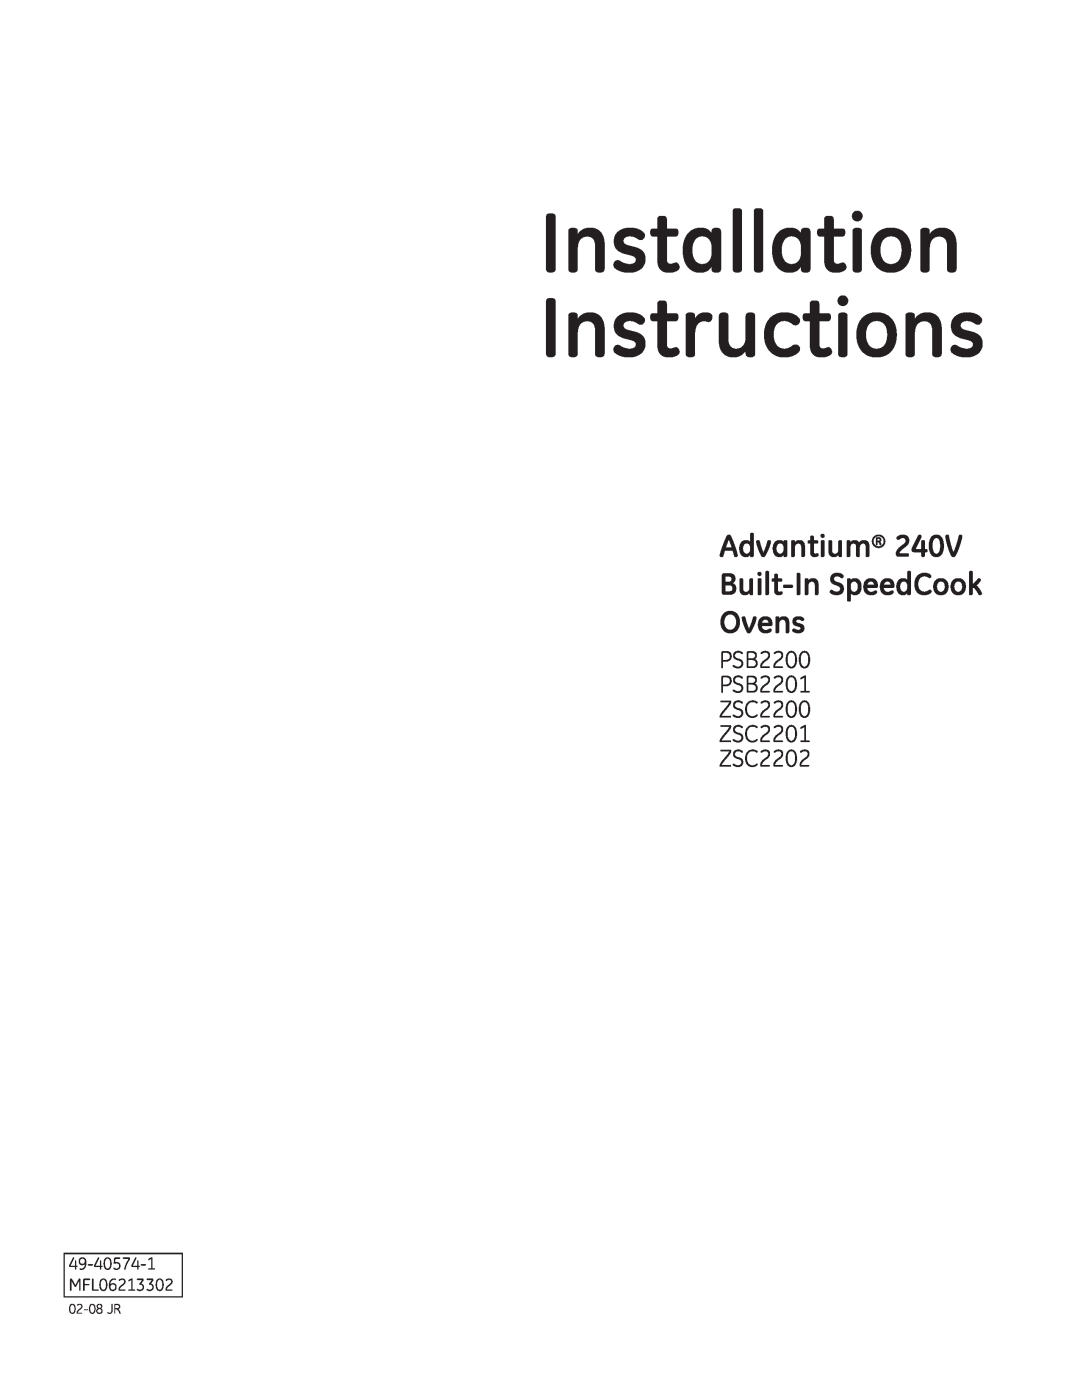 GE ZSC2200 installation instructions Installation Instructions, Advantium Built-InSpeedCook Ovens, 49-40574-1MFL06213302 